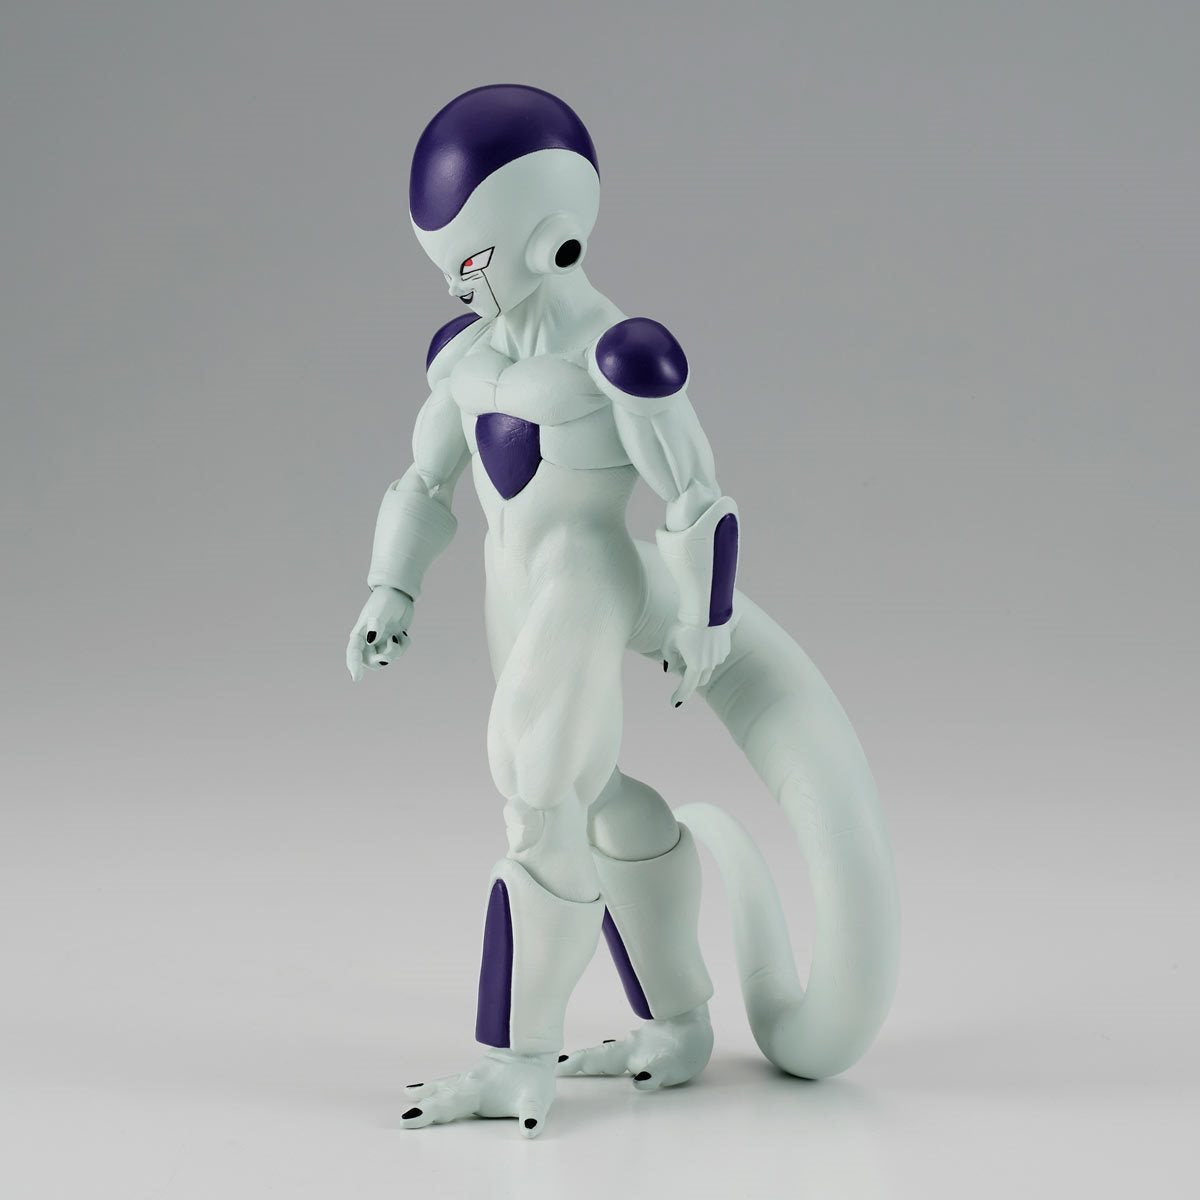 Frieza figure presented by Banpresto through their Solid Edge Works series. 